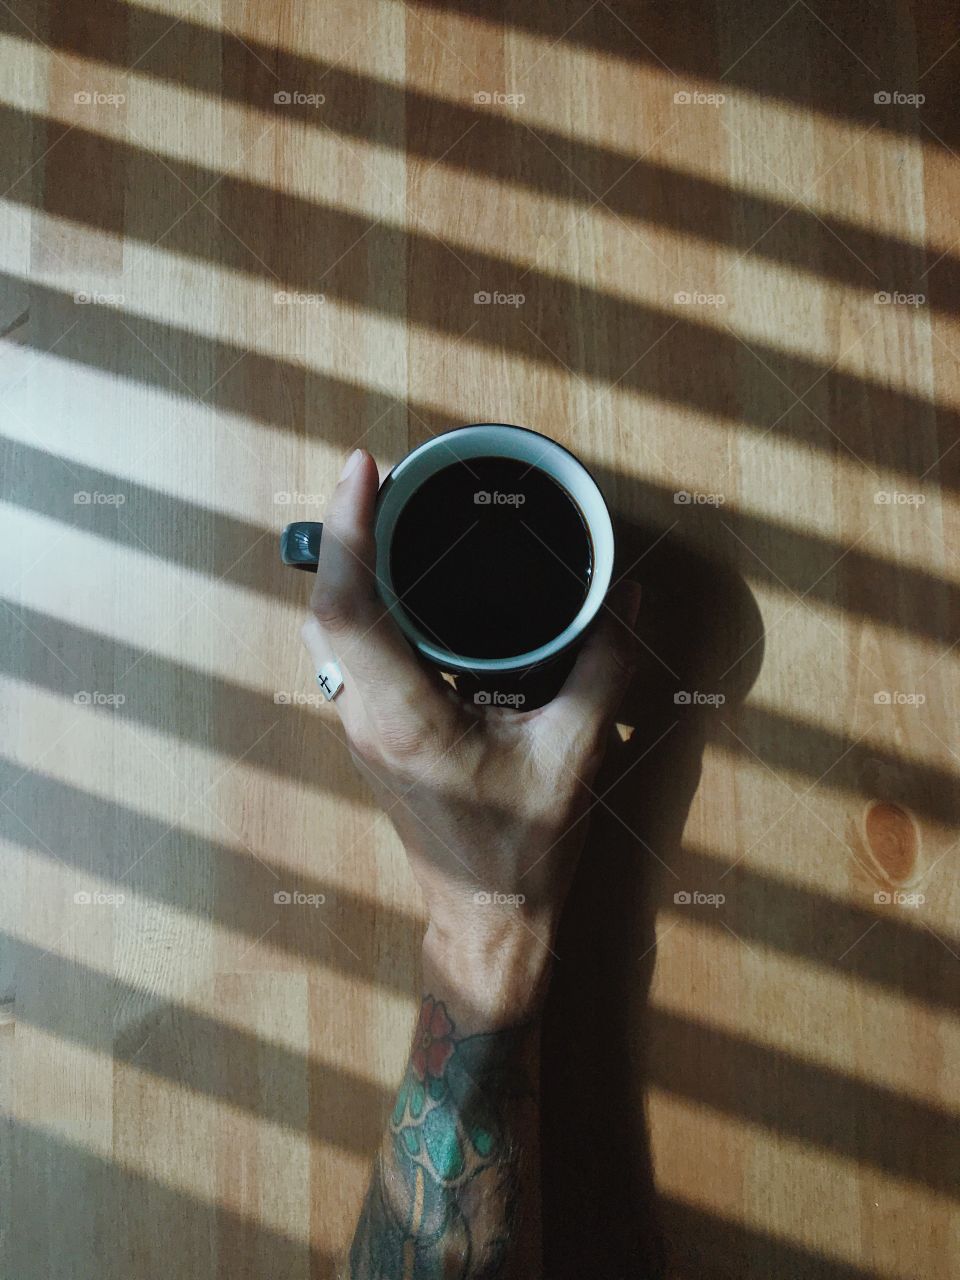 Man’s hand holding a coffee mug with window light creating interesting shadows.